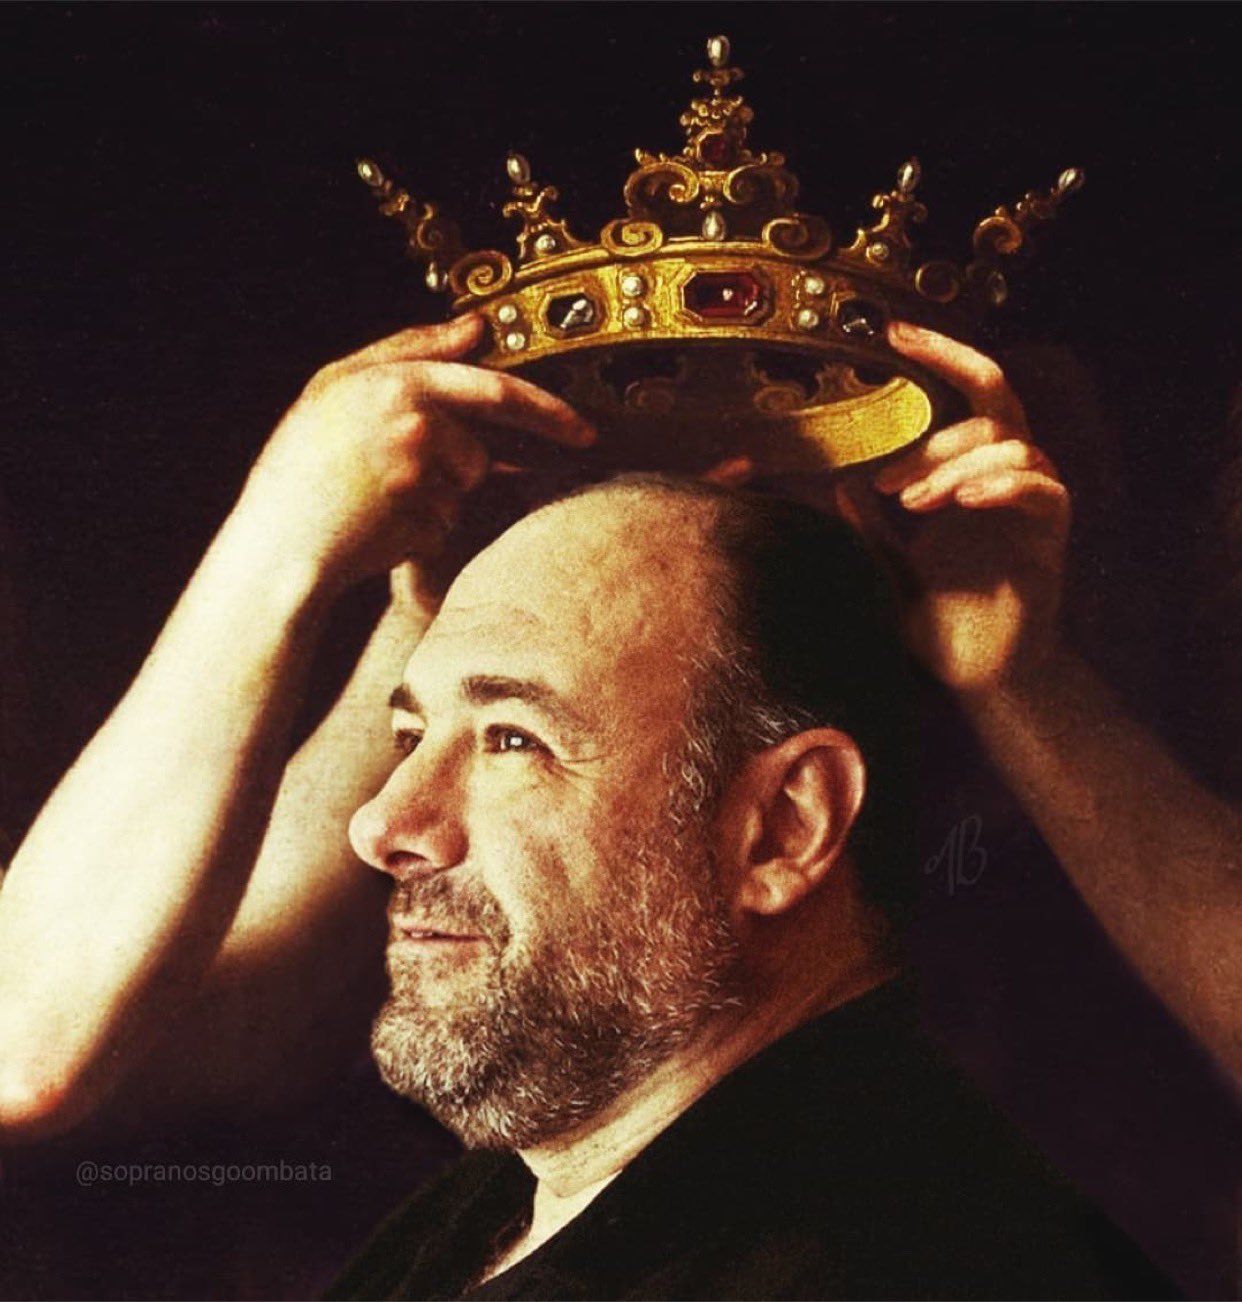 Long live the king. Happy birthday James Gandolfini 